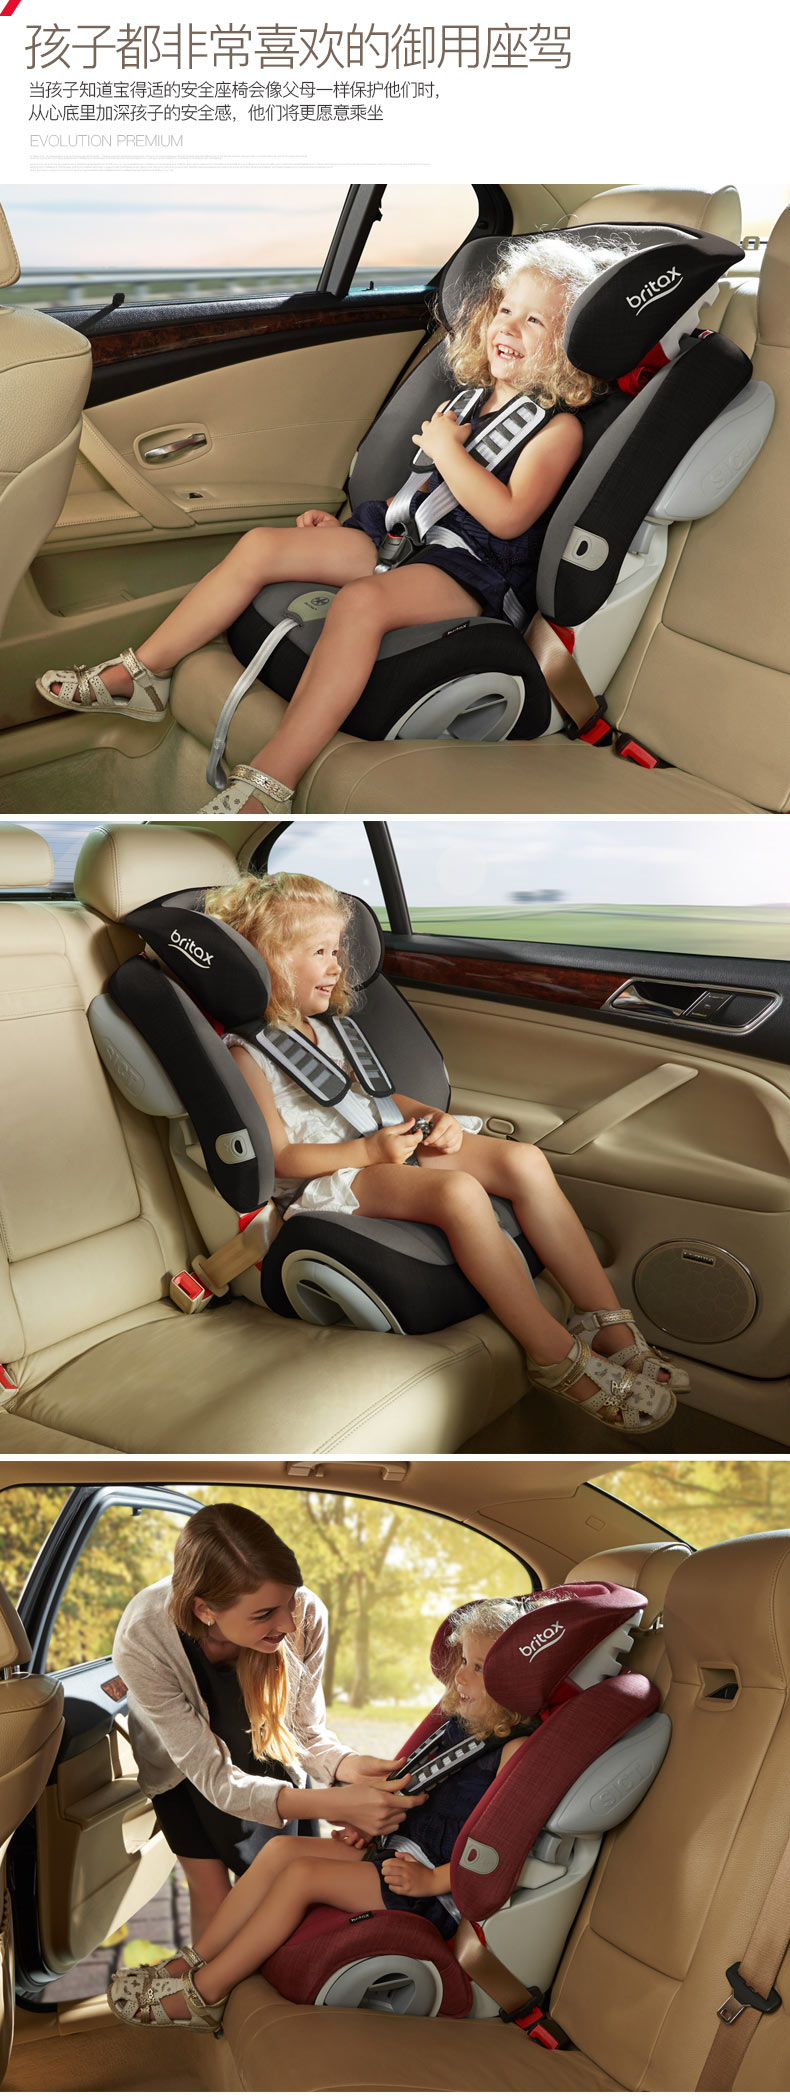 Britax全能百变王汽车儿童安全座椅（9个月-12岁） 小奶牛